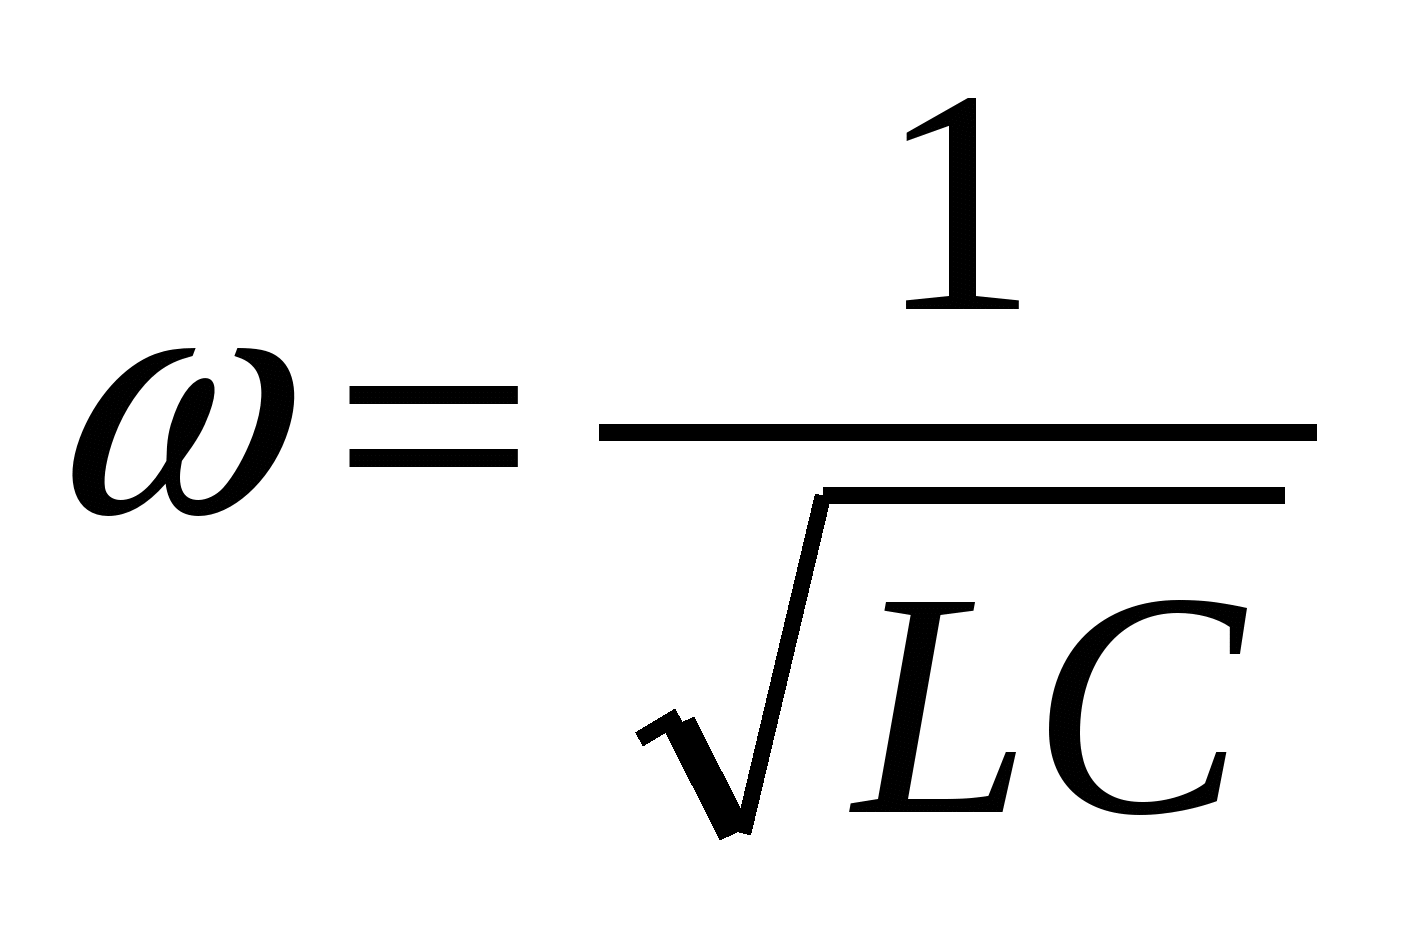 W 1 LC формула. Резонанс в физике формула. Формула Томсона. 1/LC формула. Промышленная частота равна